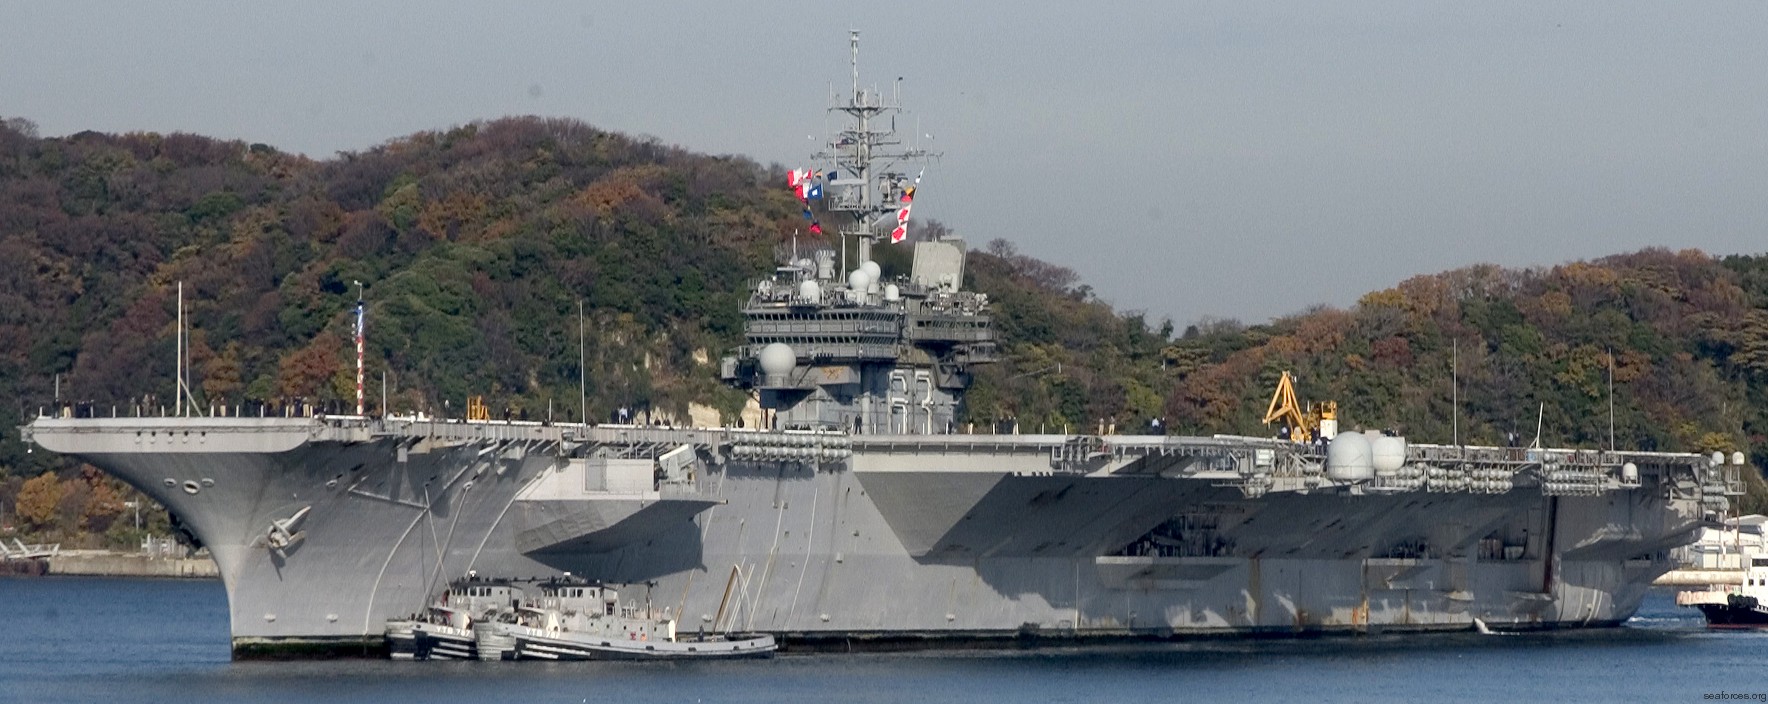 cv-63 uss kitty hawk aircraft carrier us navy 140 returning yokosuka